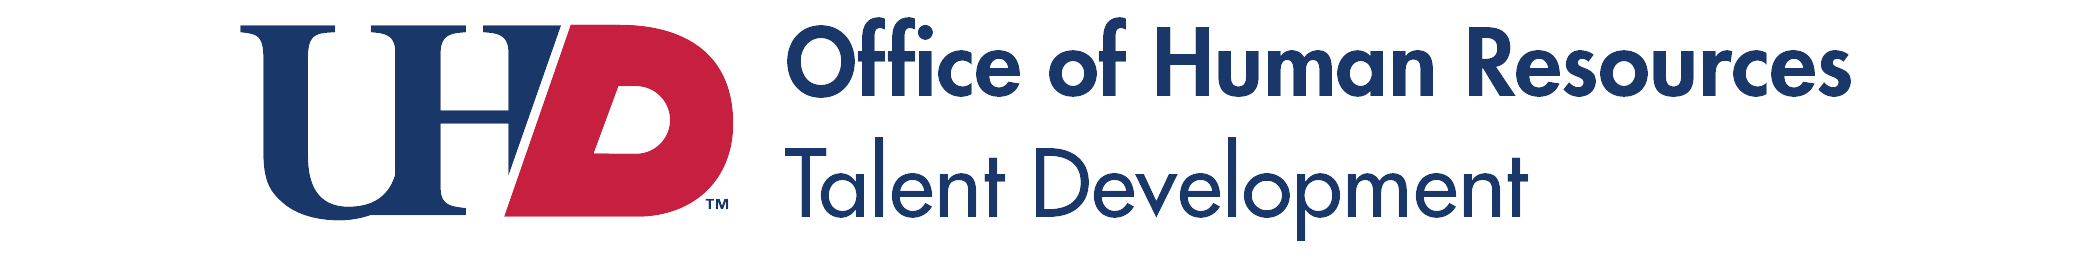 Talent Development Home banner image